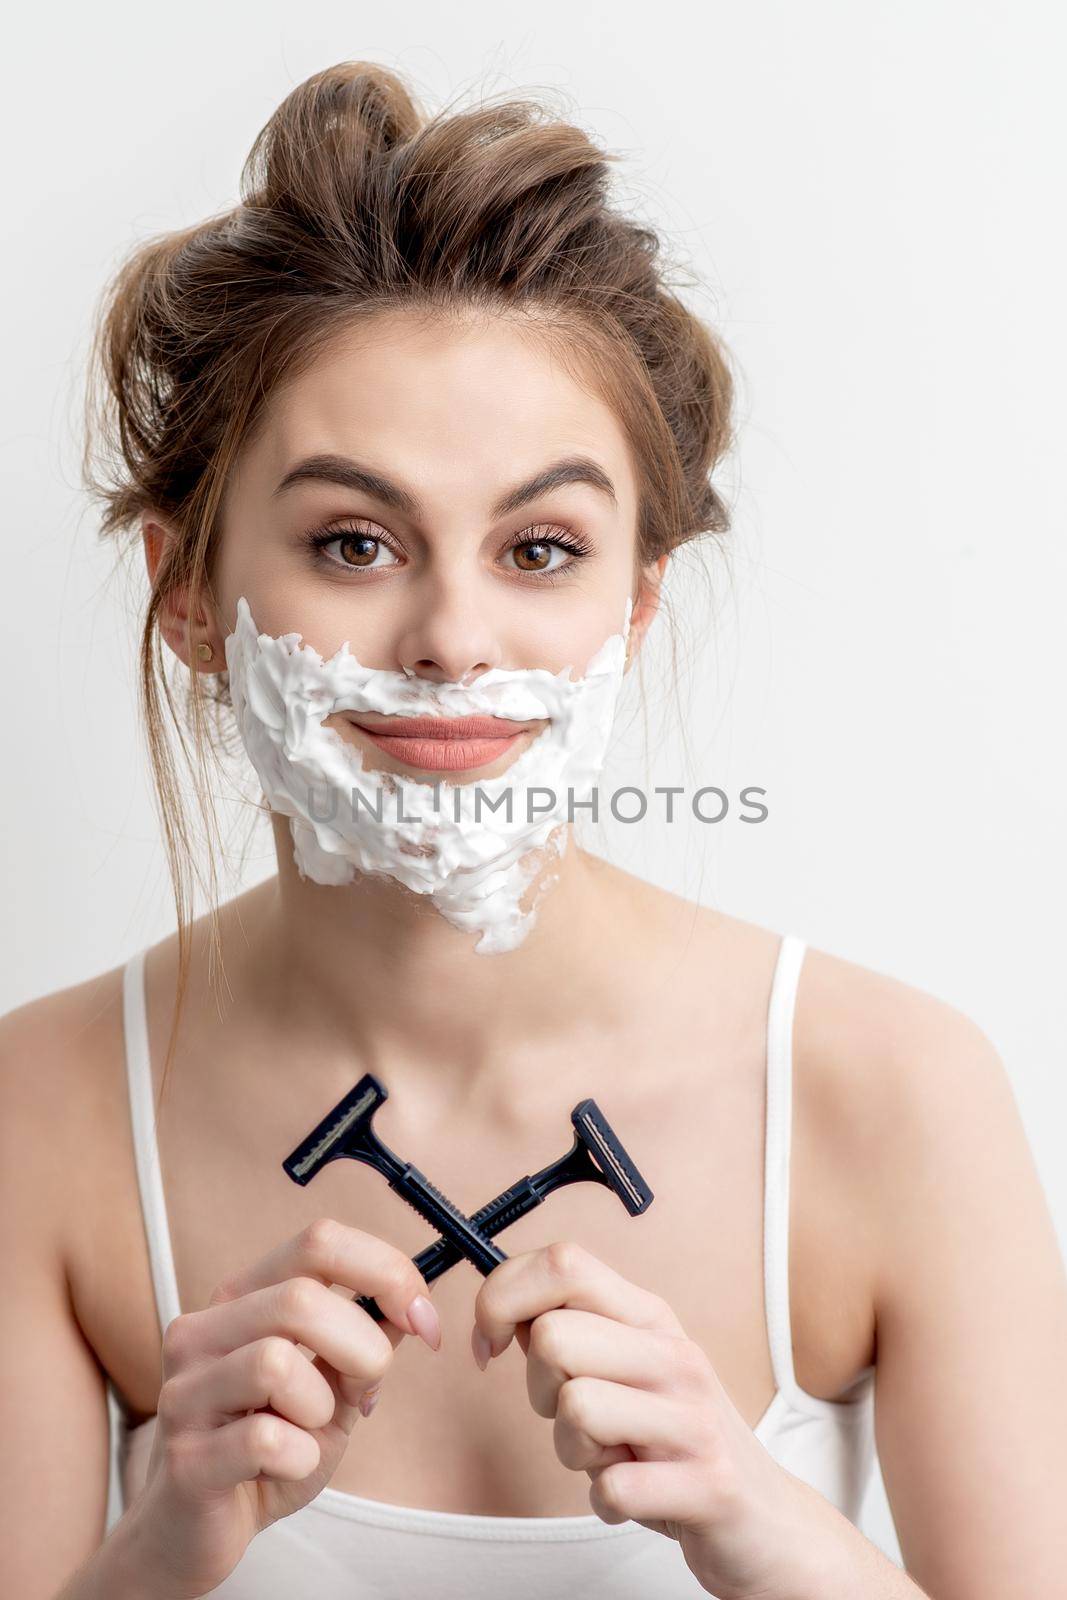 Woman with shaving foam on her face by okskukuruza